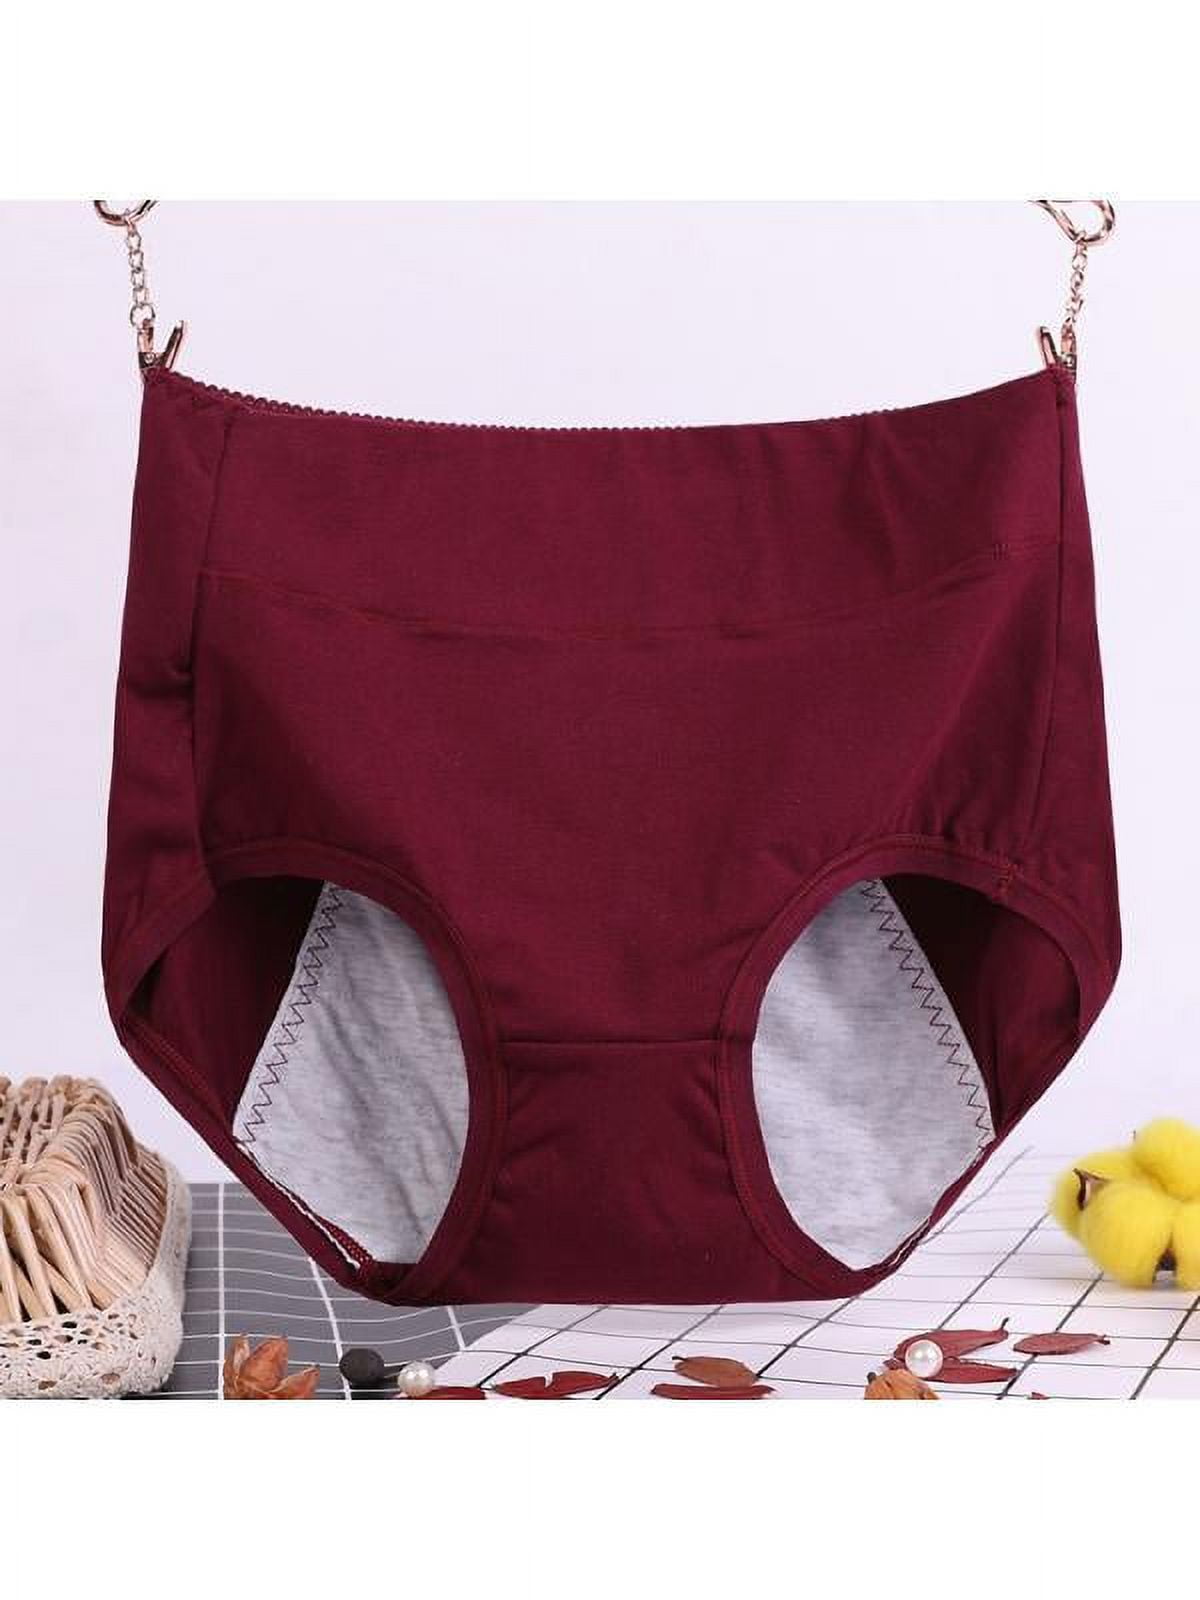 Women Postpartum Underwear Menstrual Period Sanitary Panties Leak